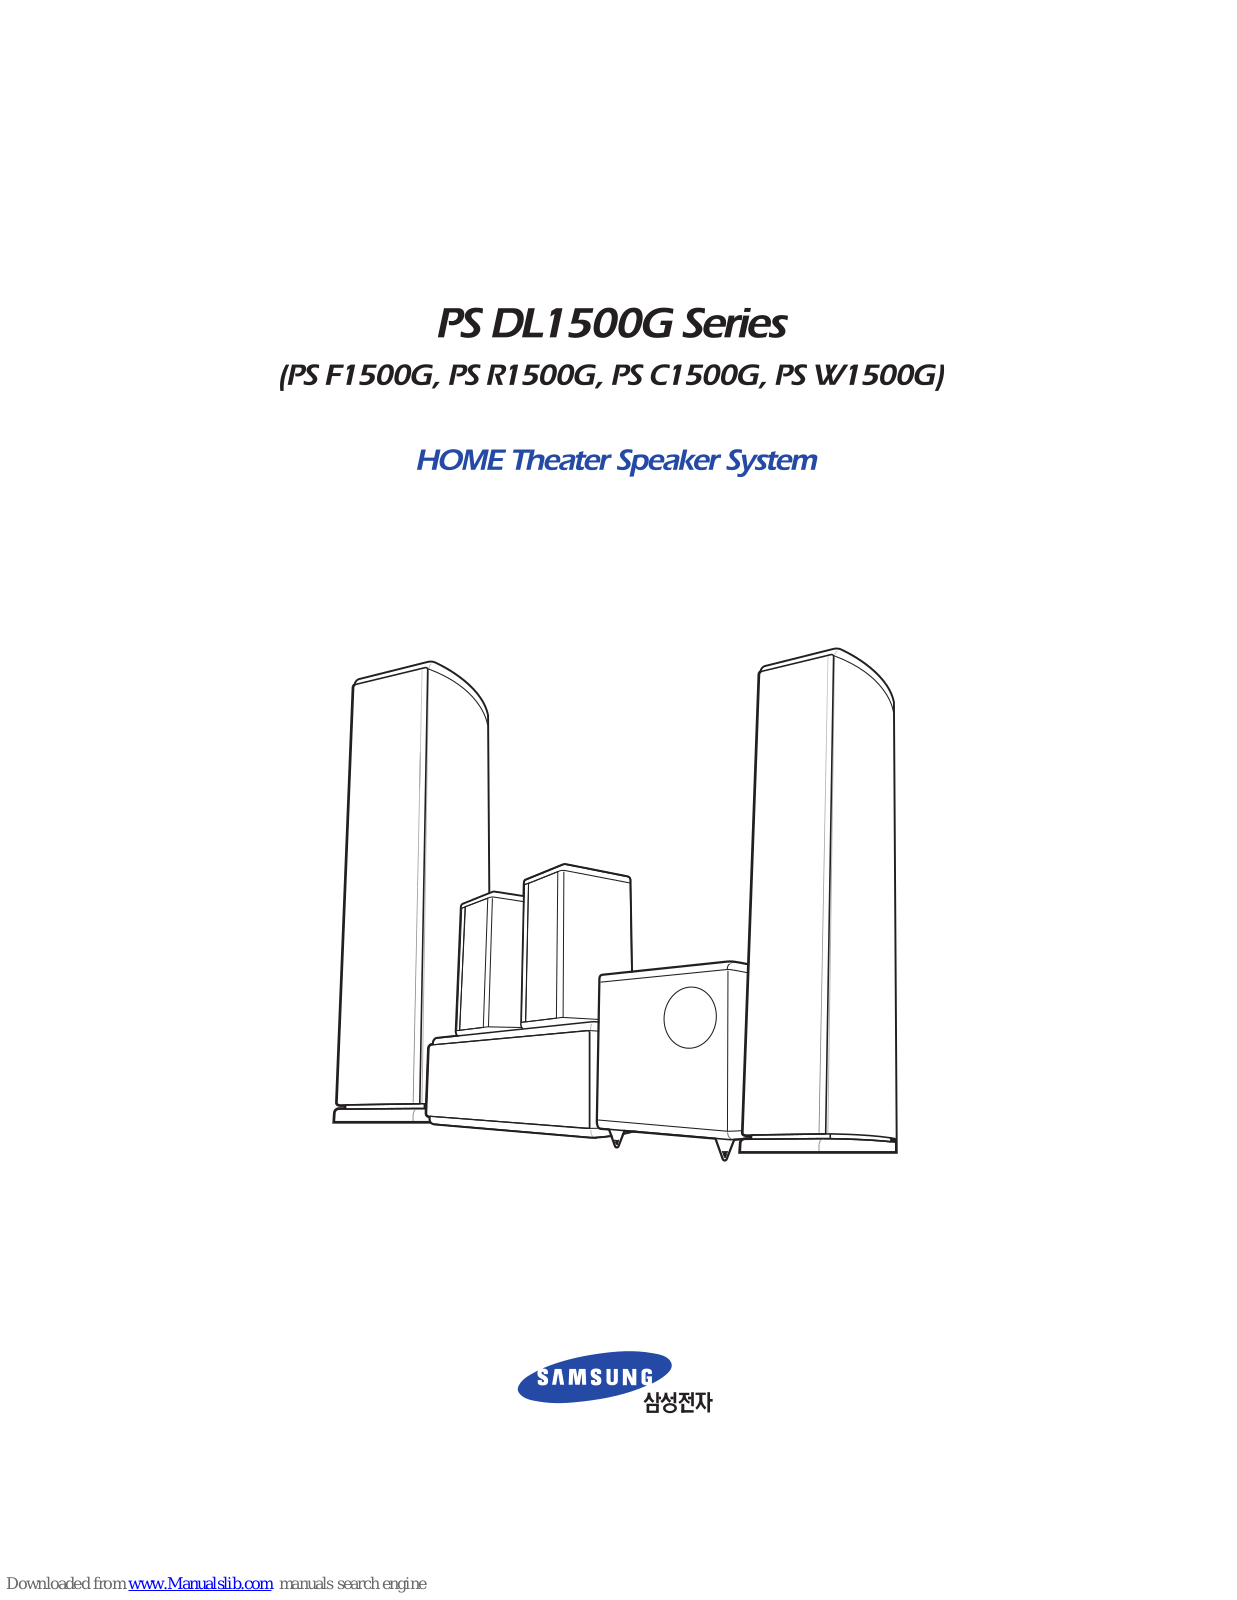 Samsung PS-C1500G, PS-DL1500G, PS-F1500G, PS R1500G, PS W1500G User Manual